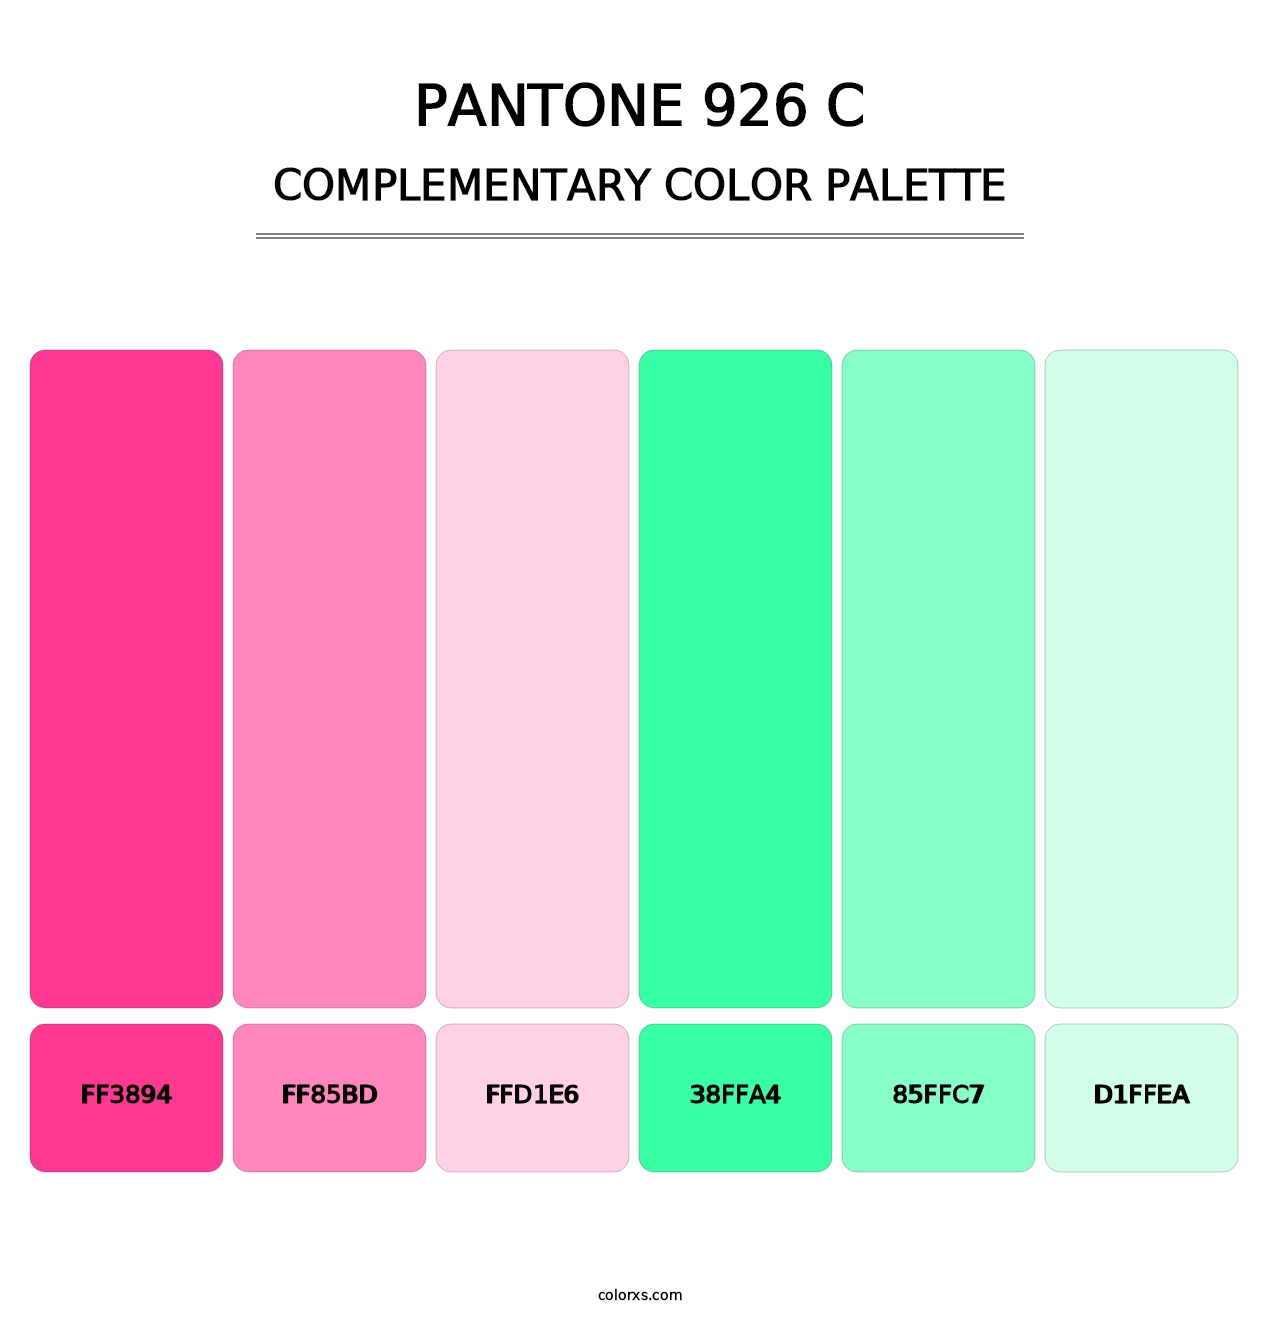 PANTONE 926 C - Complementary Color Palette